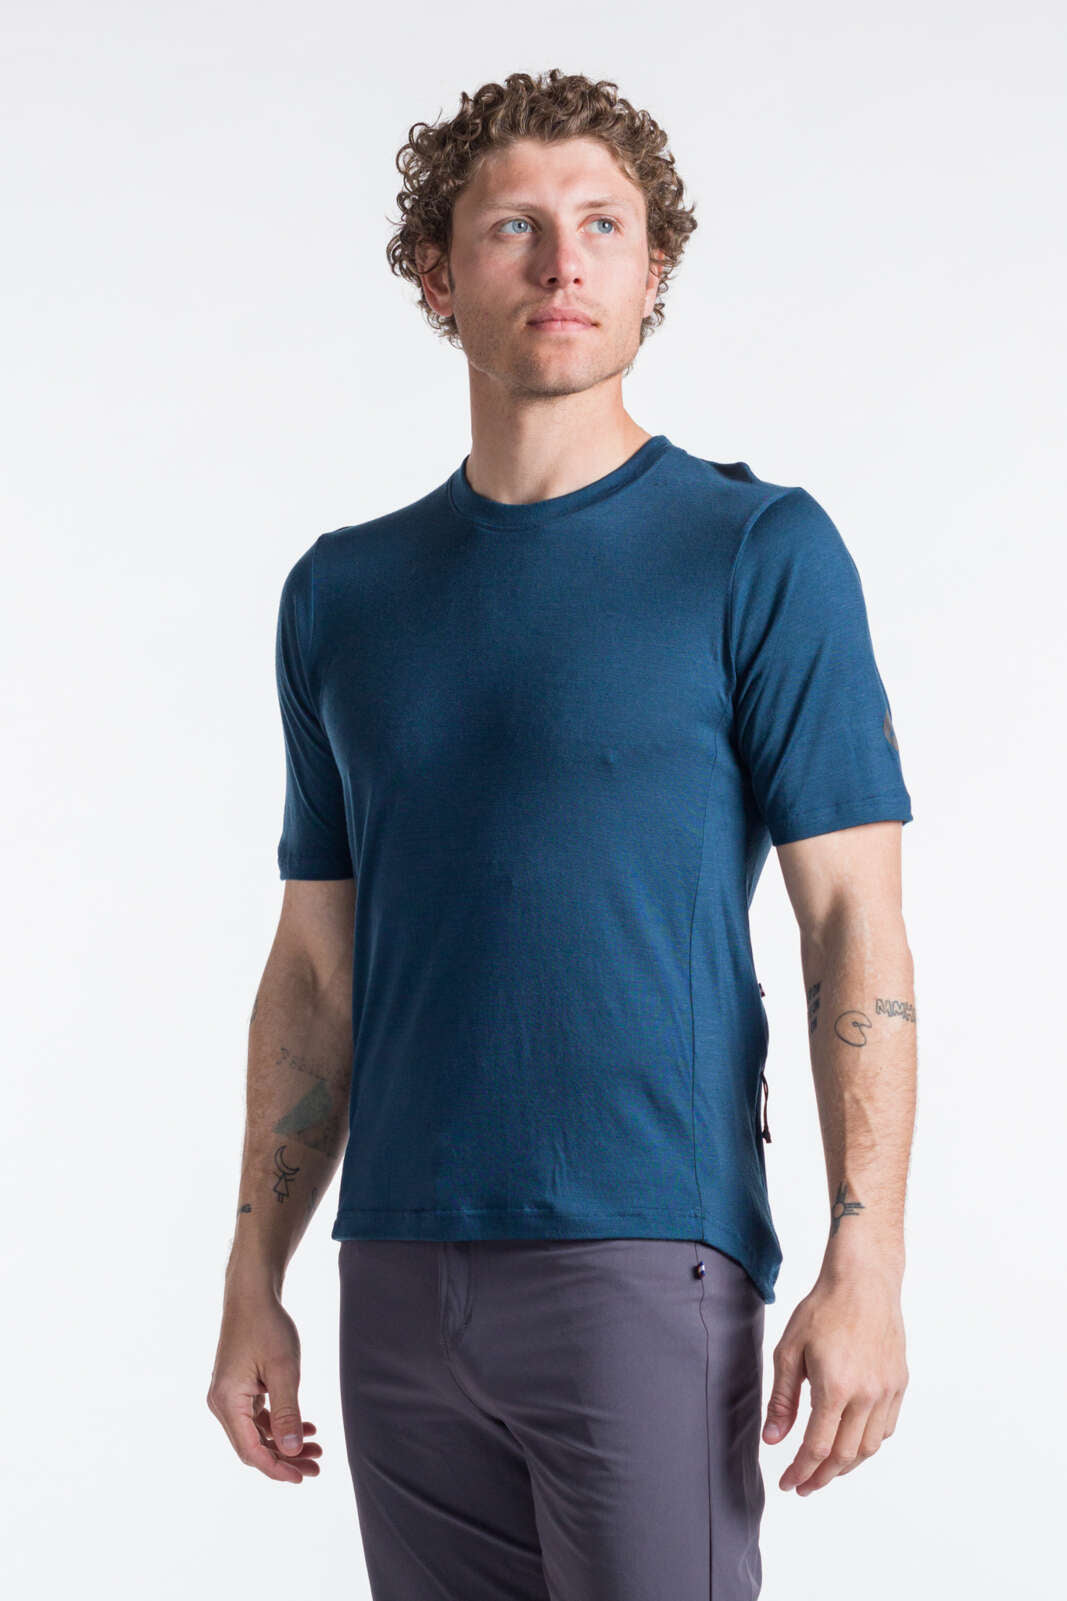 Men's Navy Blue Merino Wool MTB Shirt - Front View